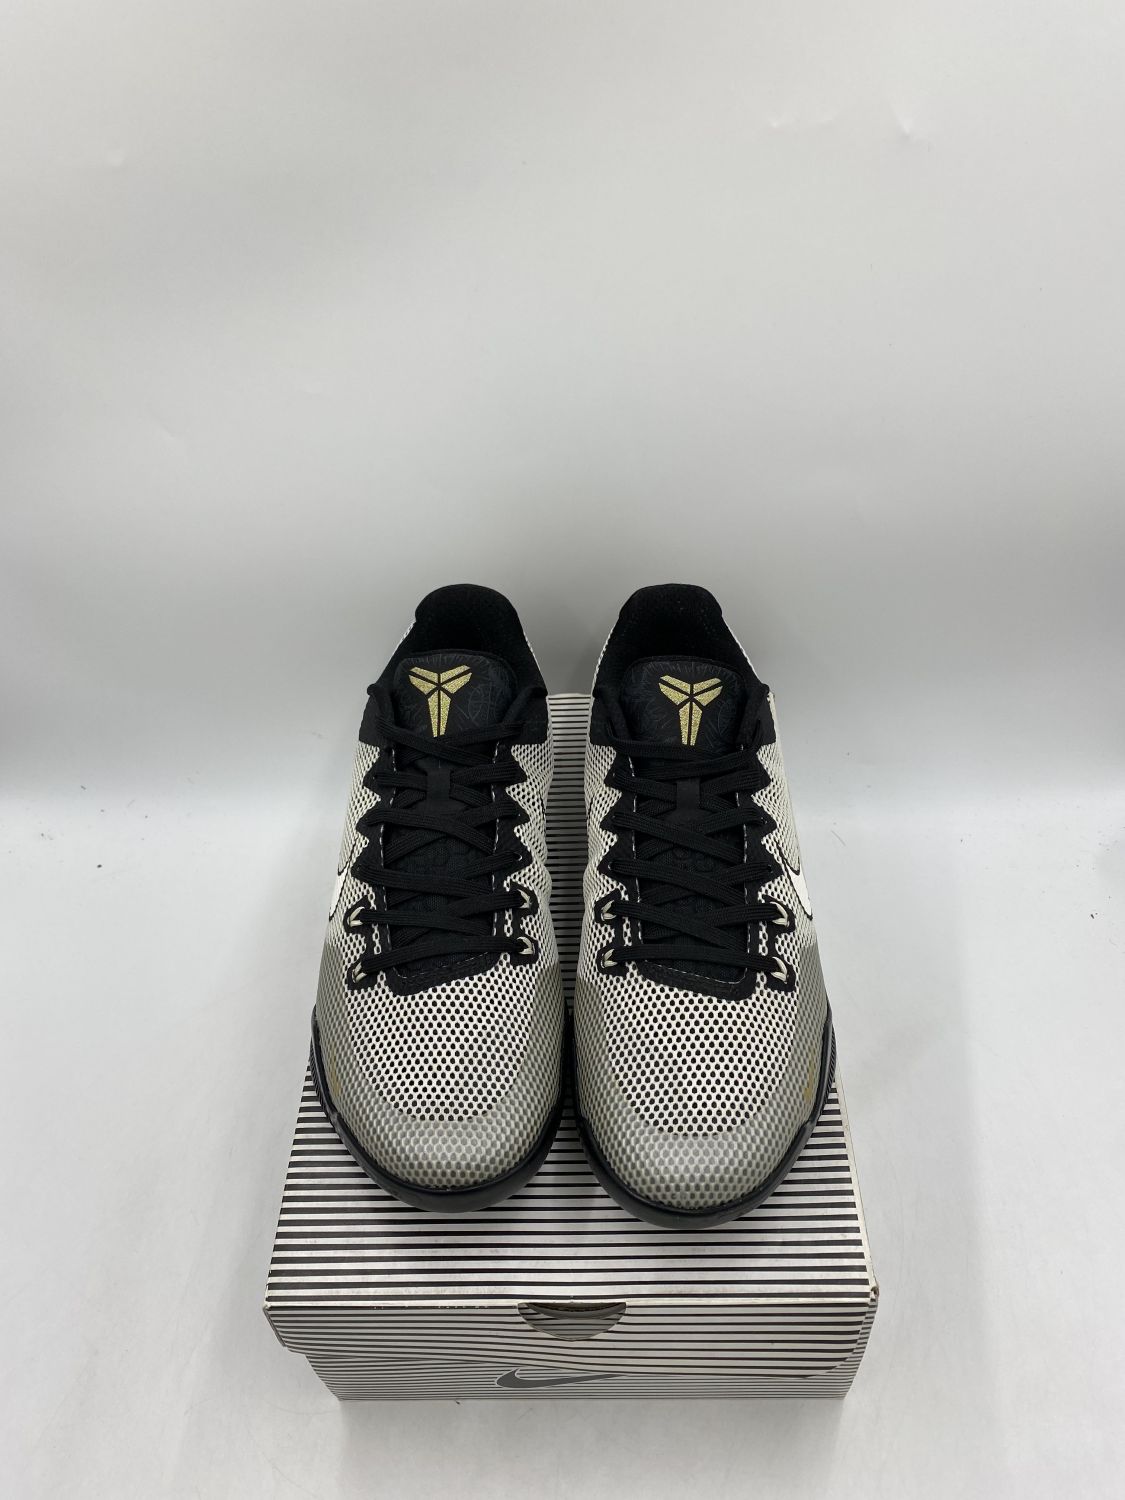 Nike Kobe 11 Quai 54 | AfterMarket